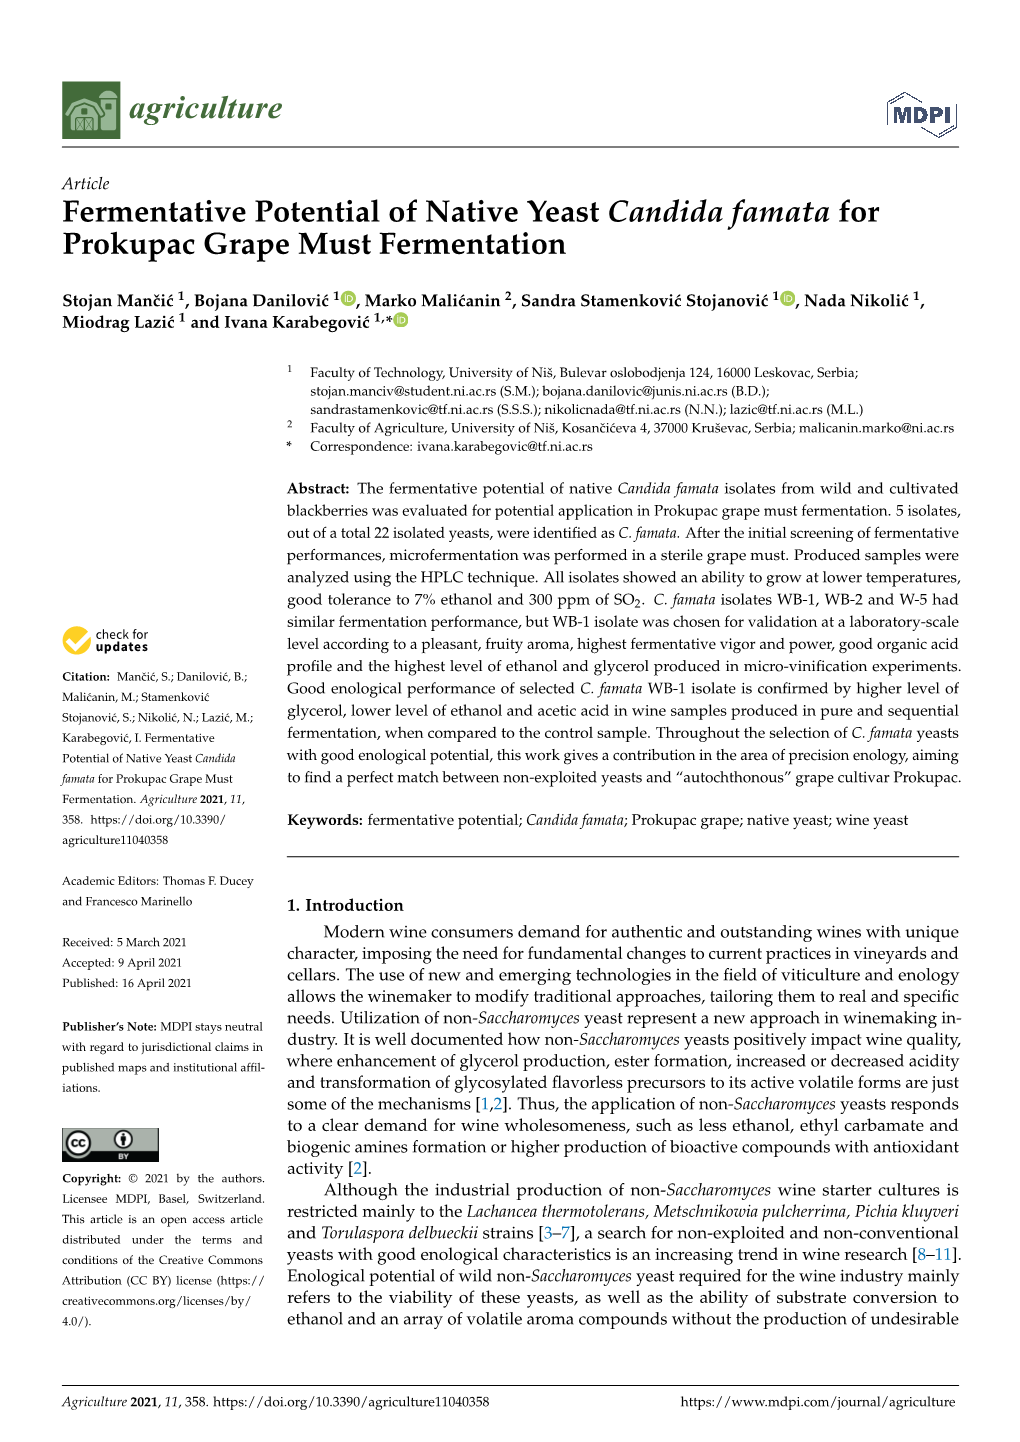 Fermentative Potential of Native Yeast Candida Famata for Prokupac Grape Must Fermentation